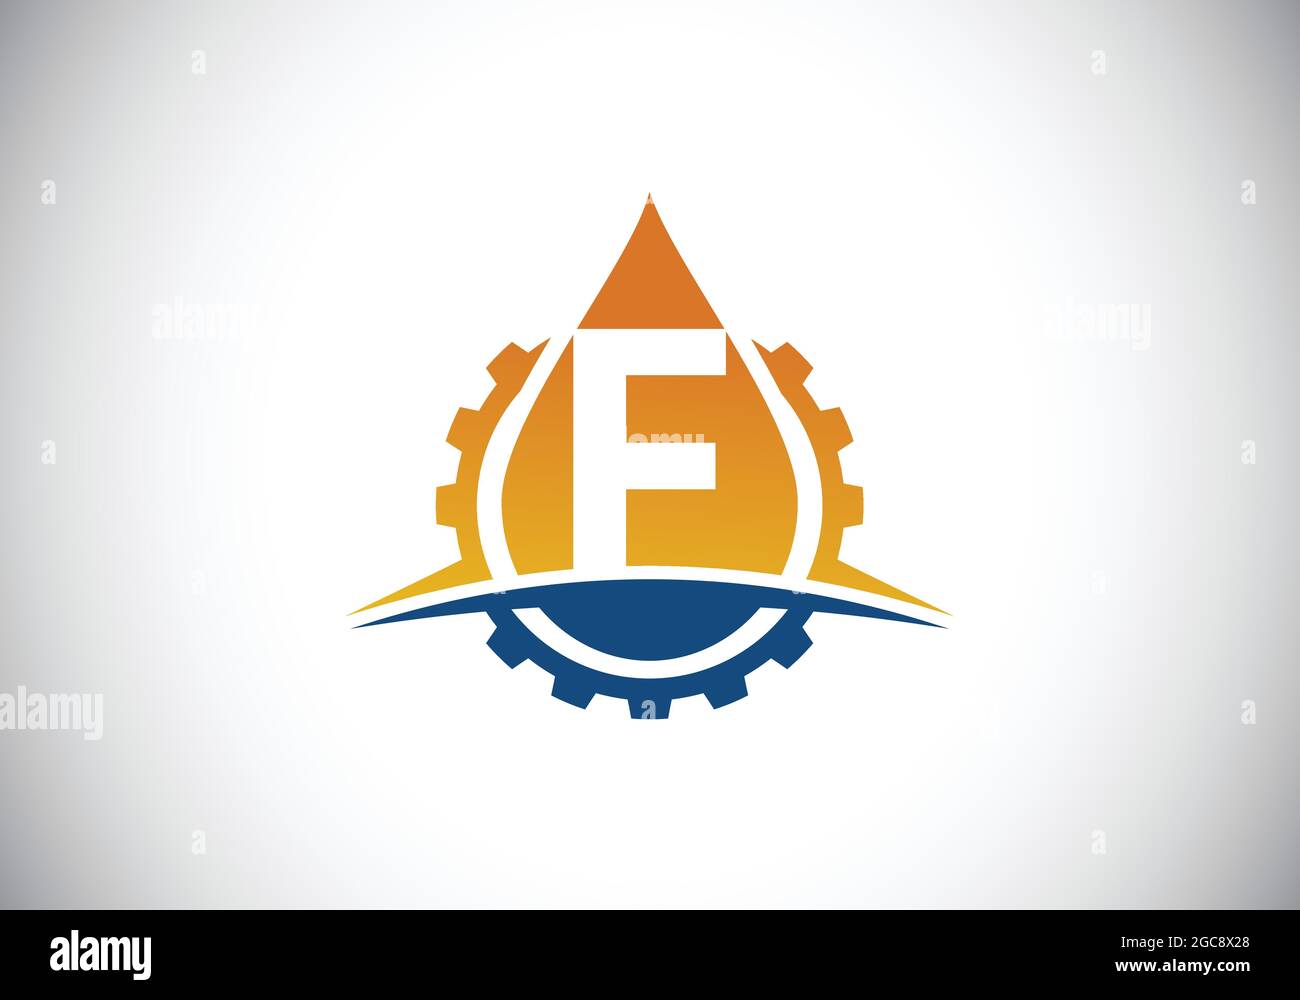 petroleum engineering logo